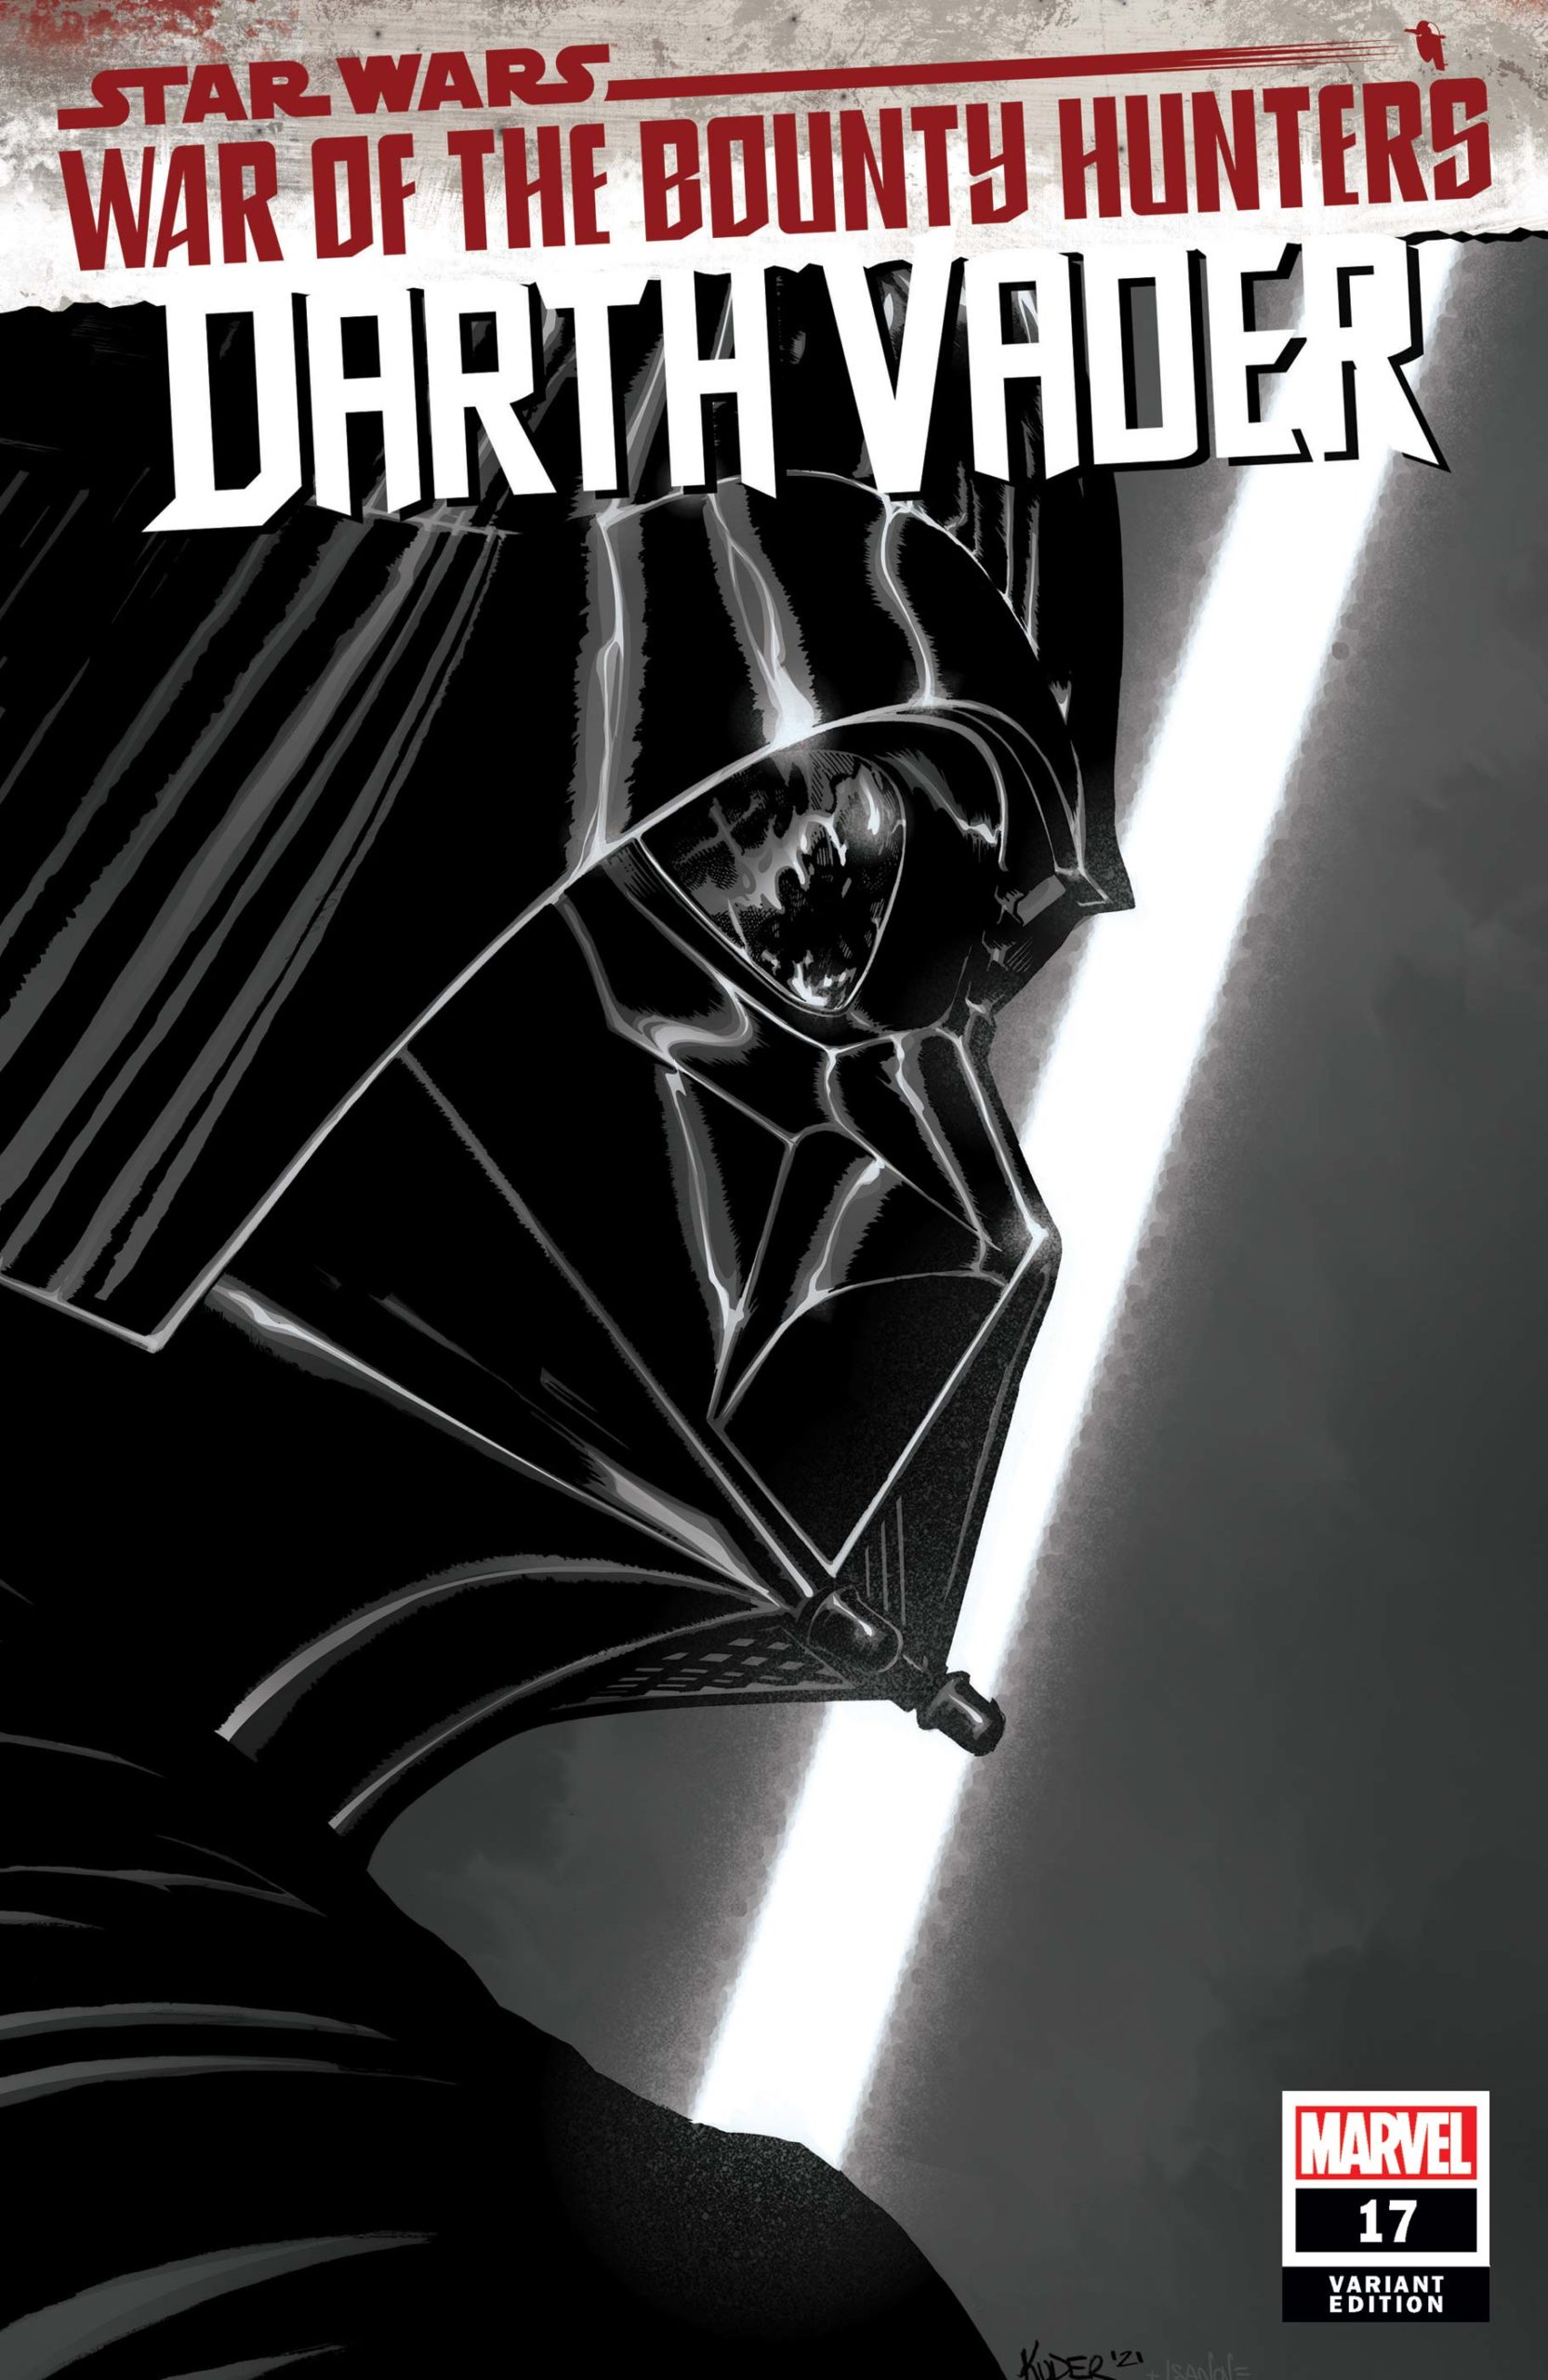 Darth Vader #17 (Aaron Kuder Carbonite Variant Cover) (27.10.2021)